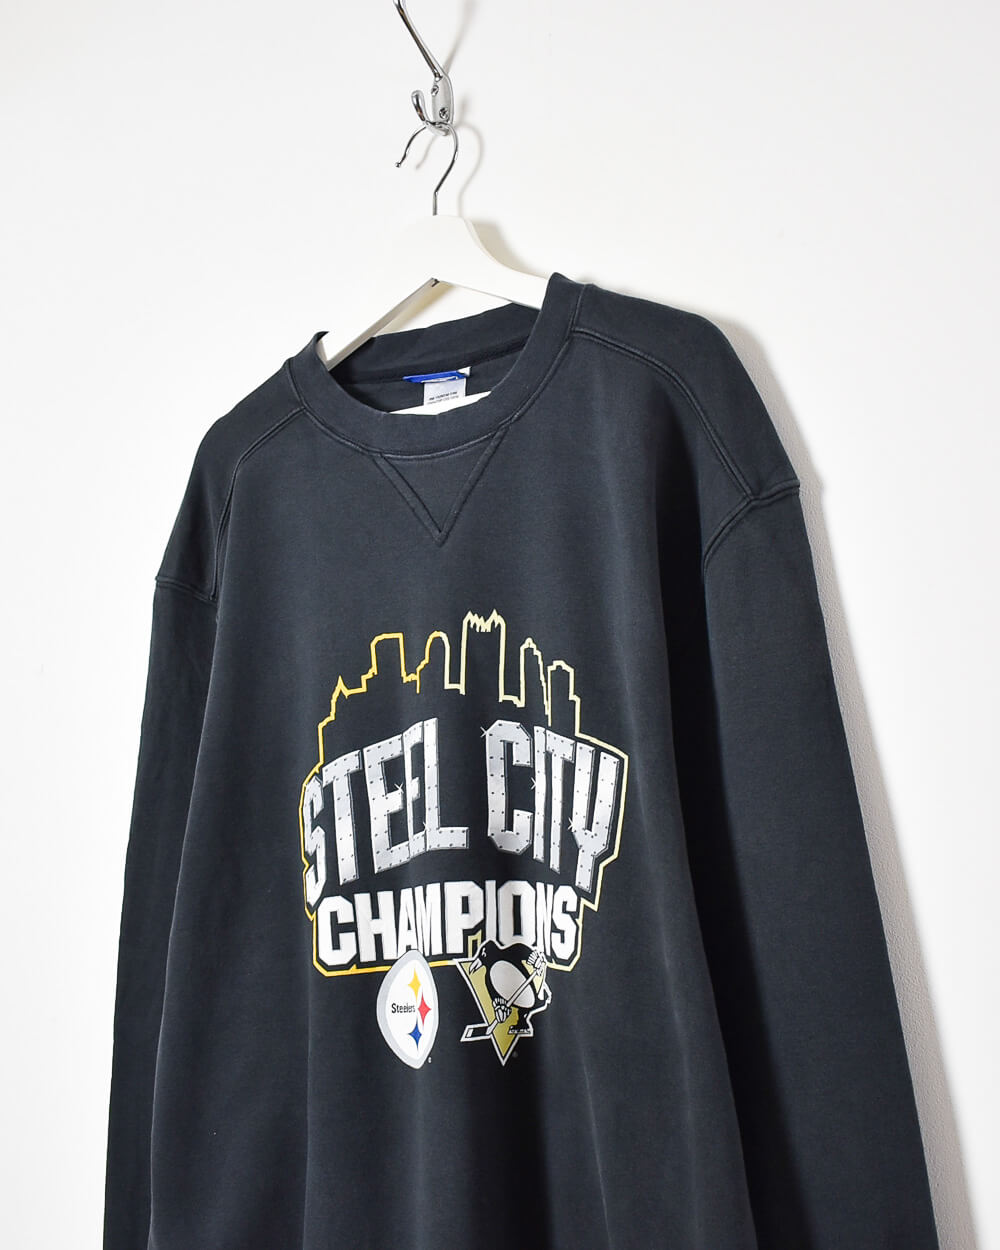 Black Reebok Steelers Steel City Champions Sweatshirt - Large